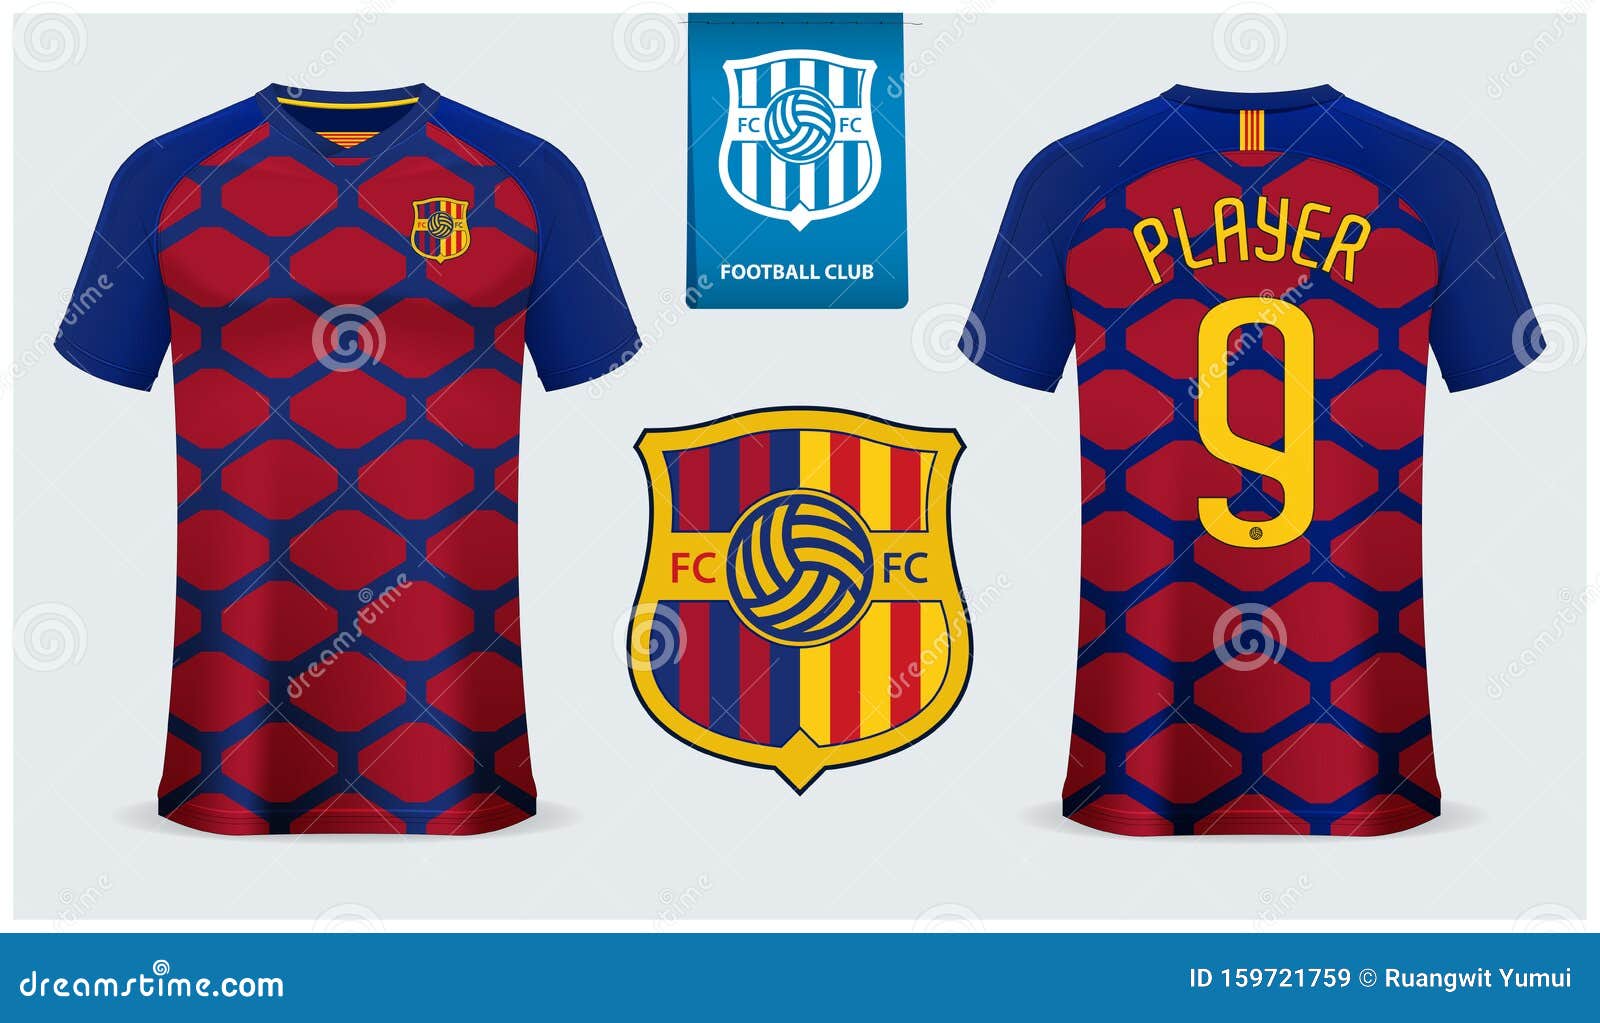 Download Soccer Jersey Or Football Kit Mockup Template Design For ...